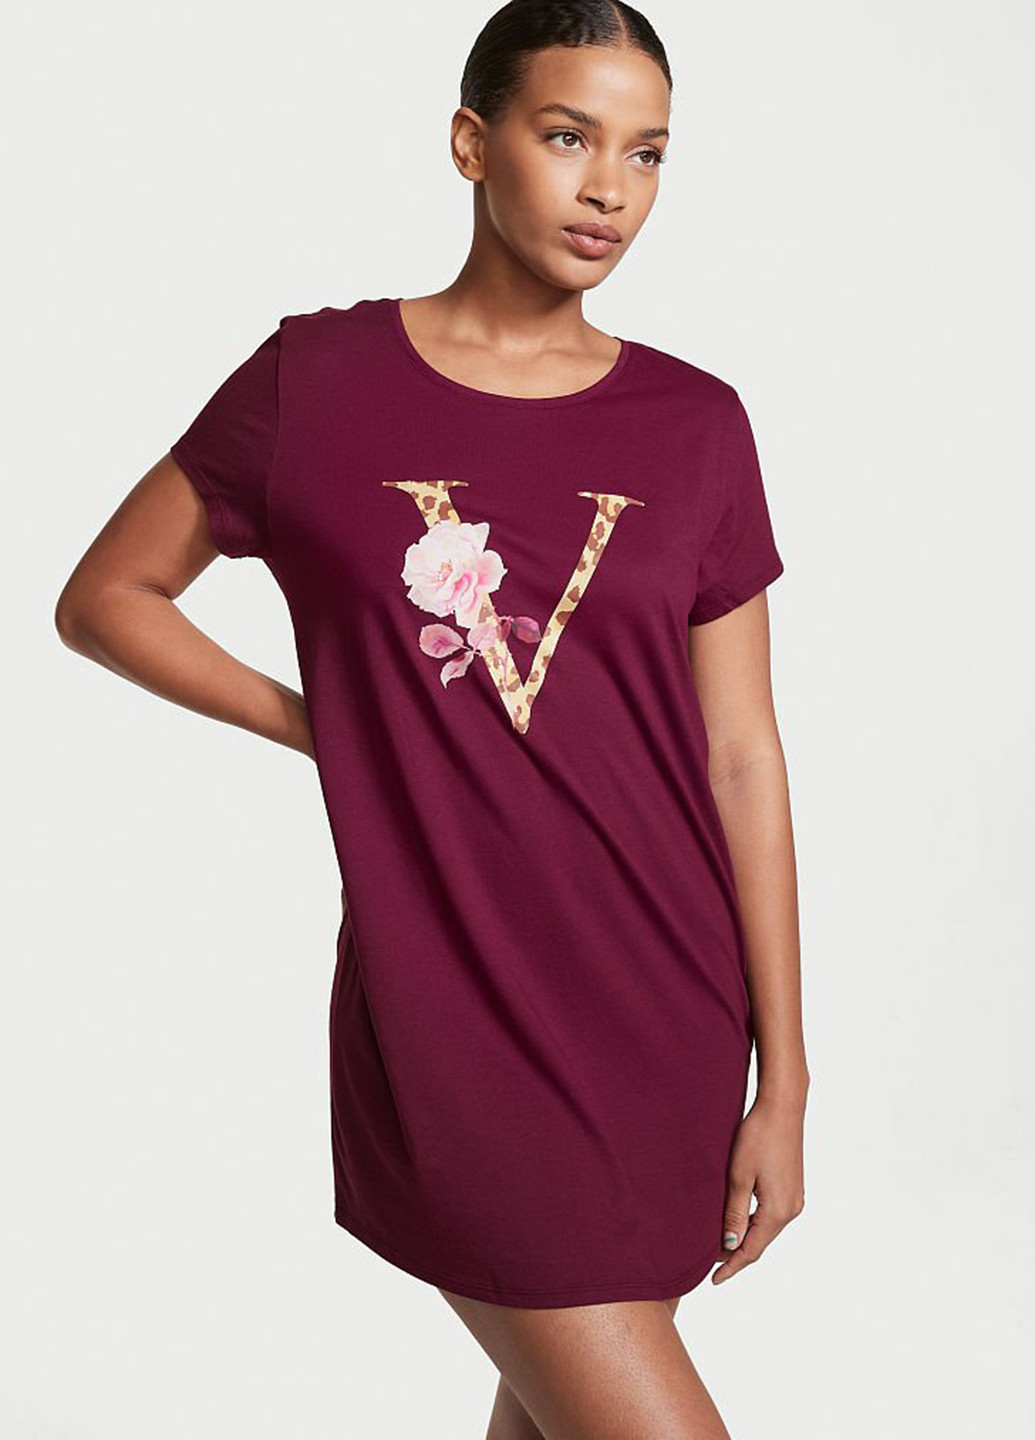 Темно-бордовое домашнее платье платье-футболка Victoria's Secret с логотипом